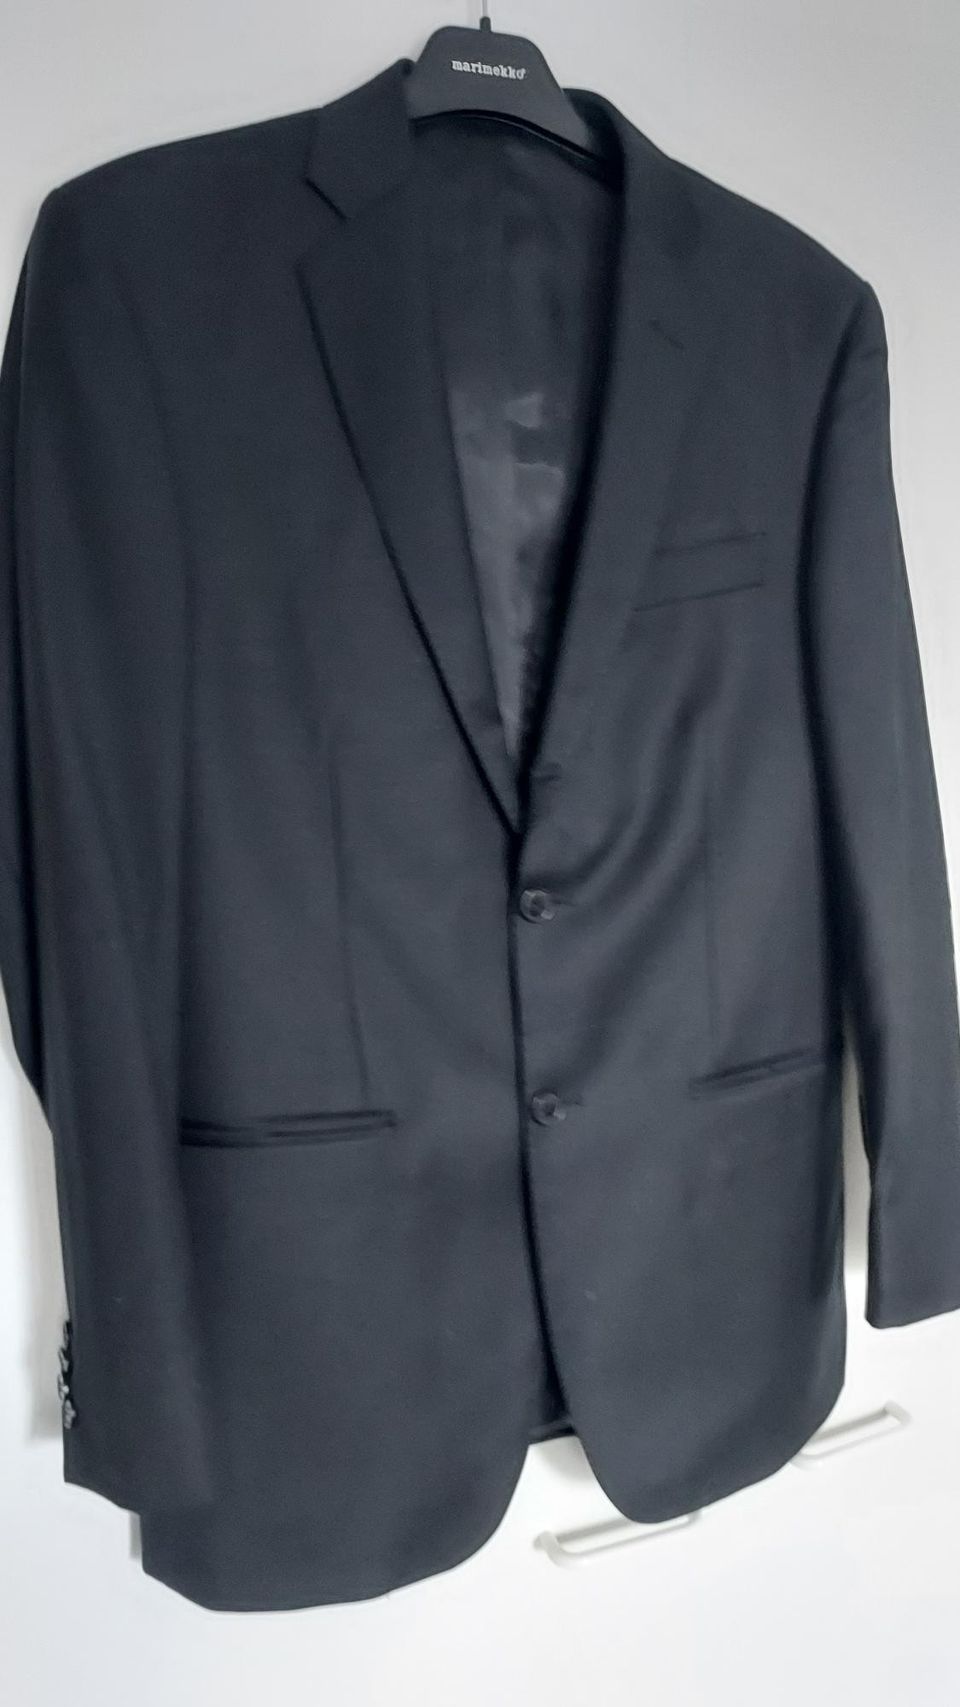 Dressmann puvun takki 46R musta